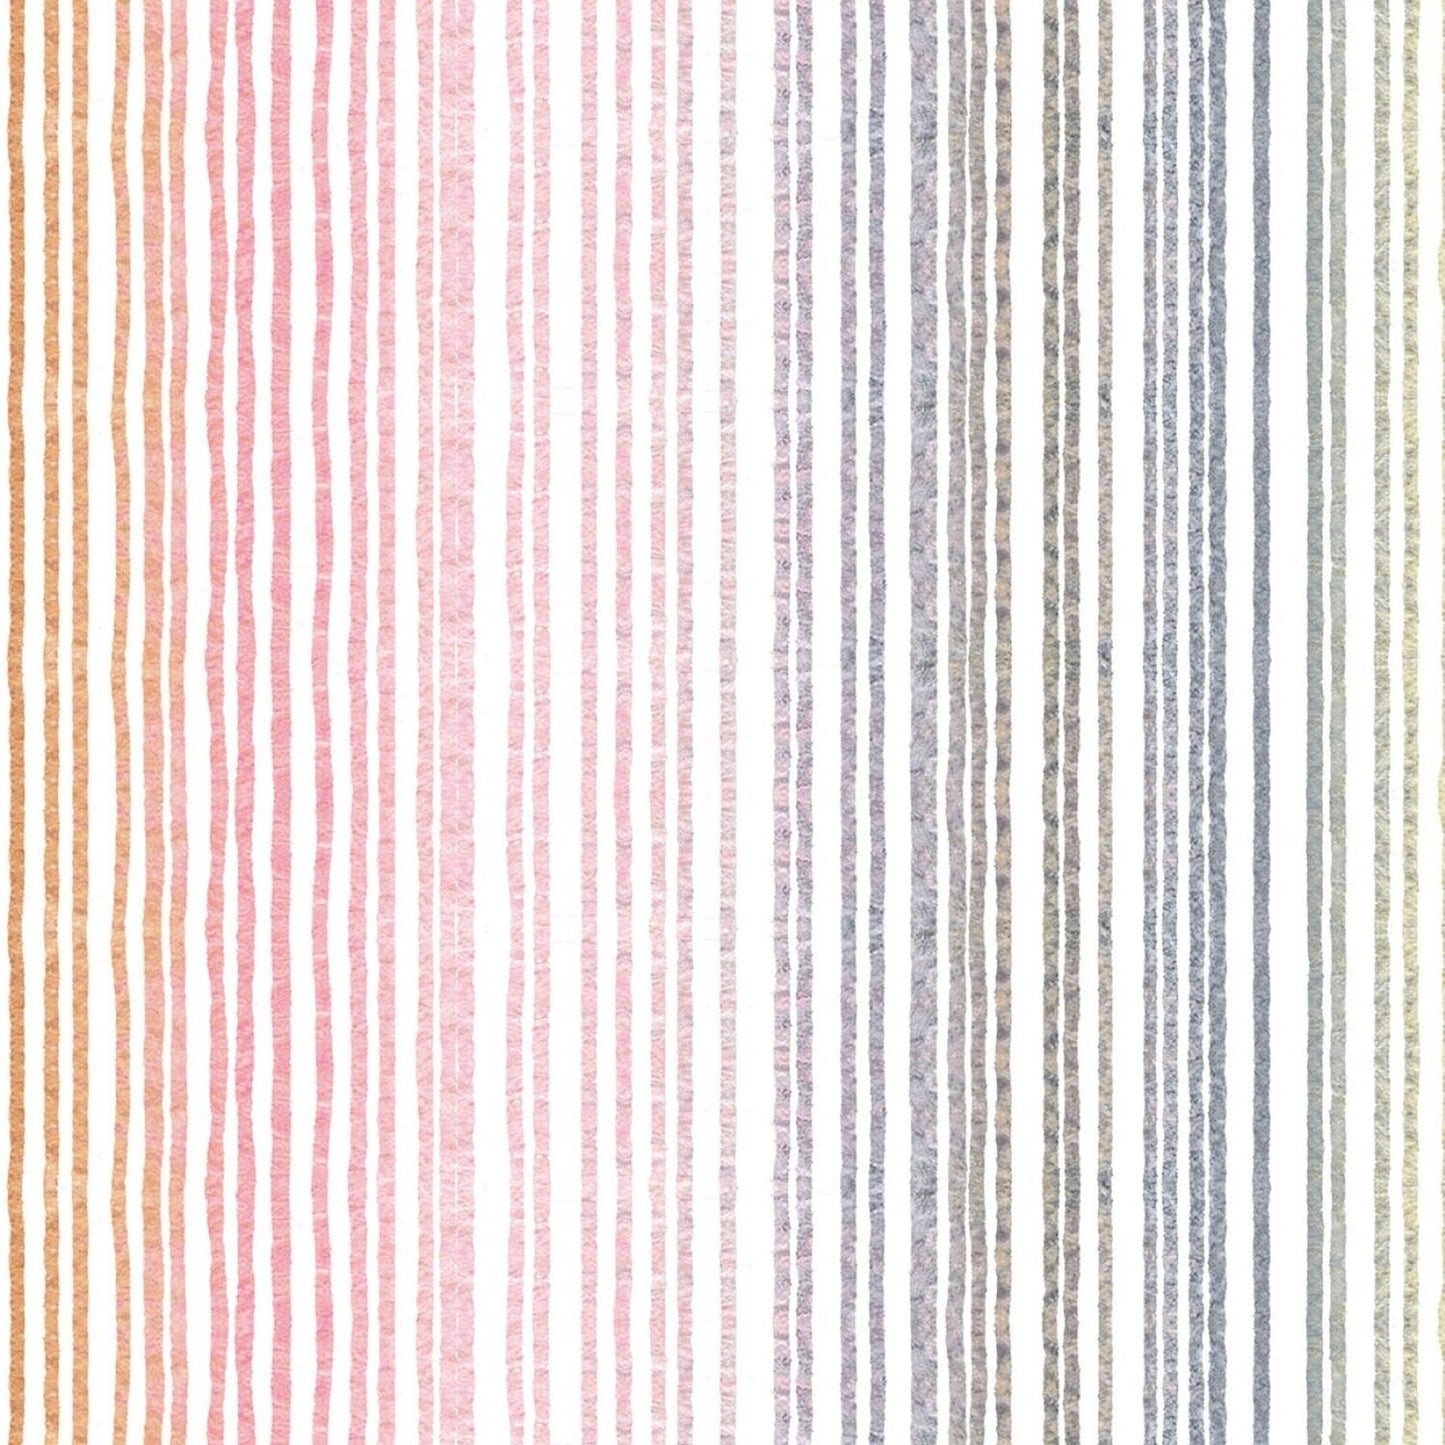 Little Darlings by Sillier Than Sally Designs Stripe LITD4159 MU Cotton Woven Fabric